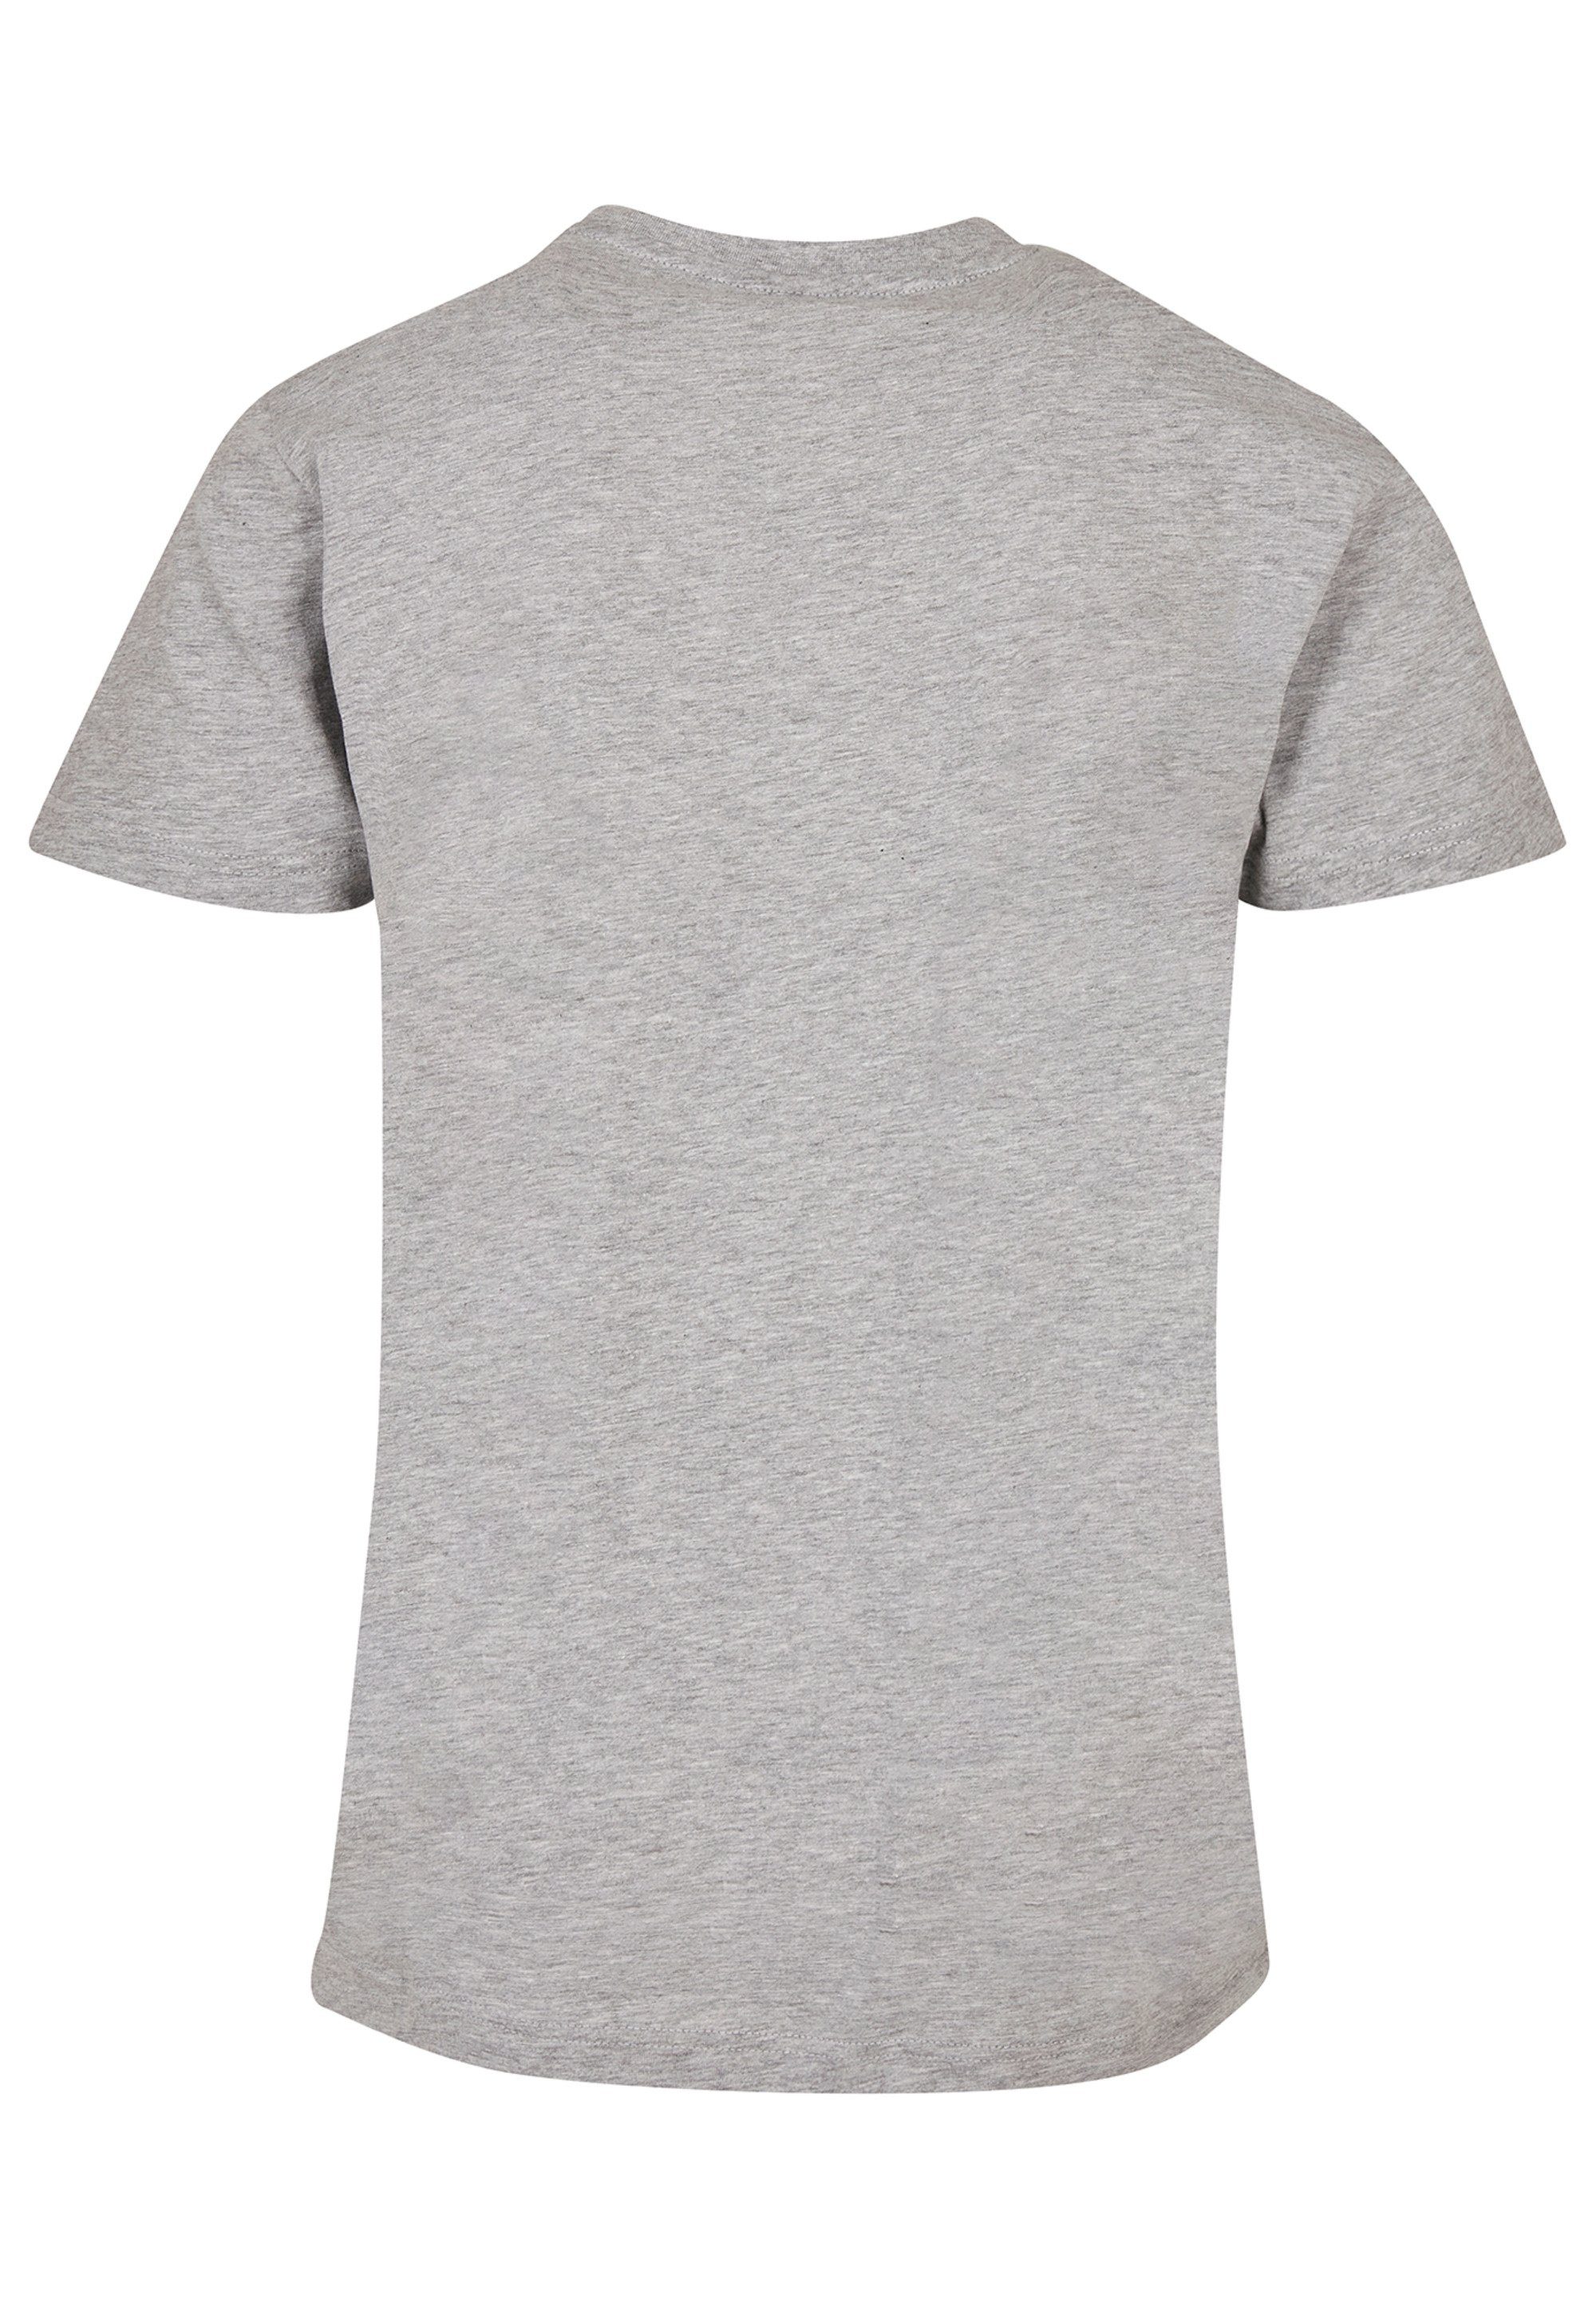 F4NT4STIC T-Shirt Schmetterling Silhouette Print TEE heather grey UNISEX